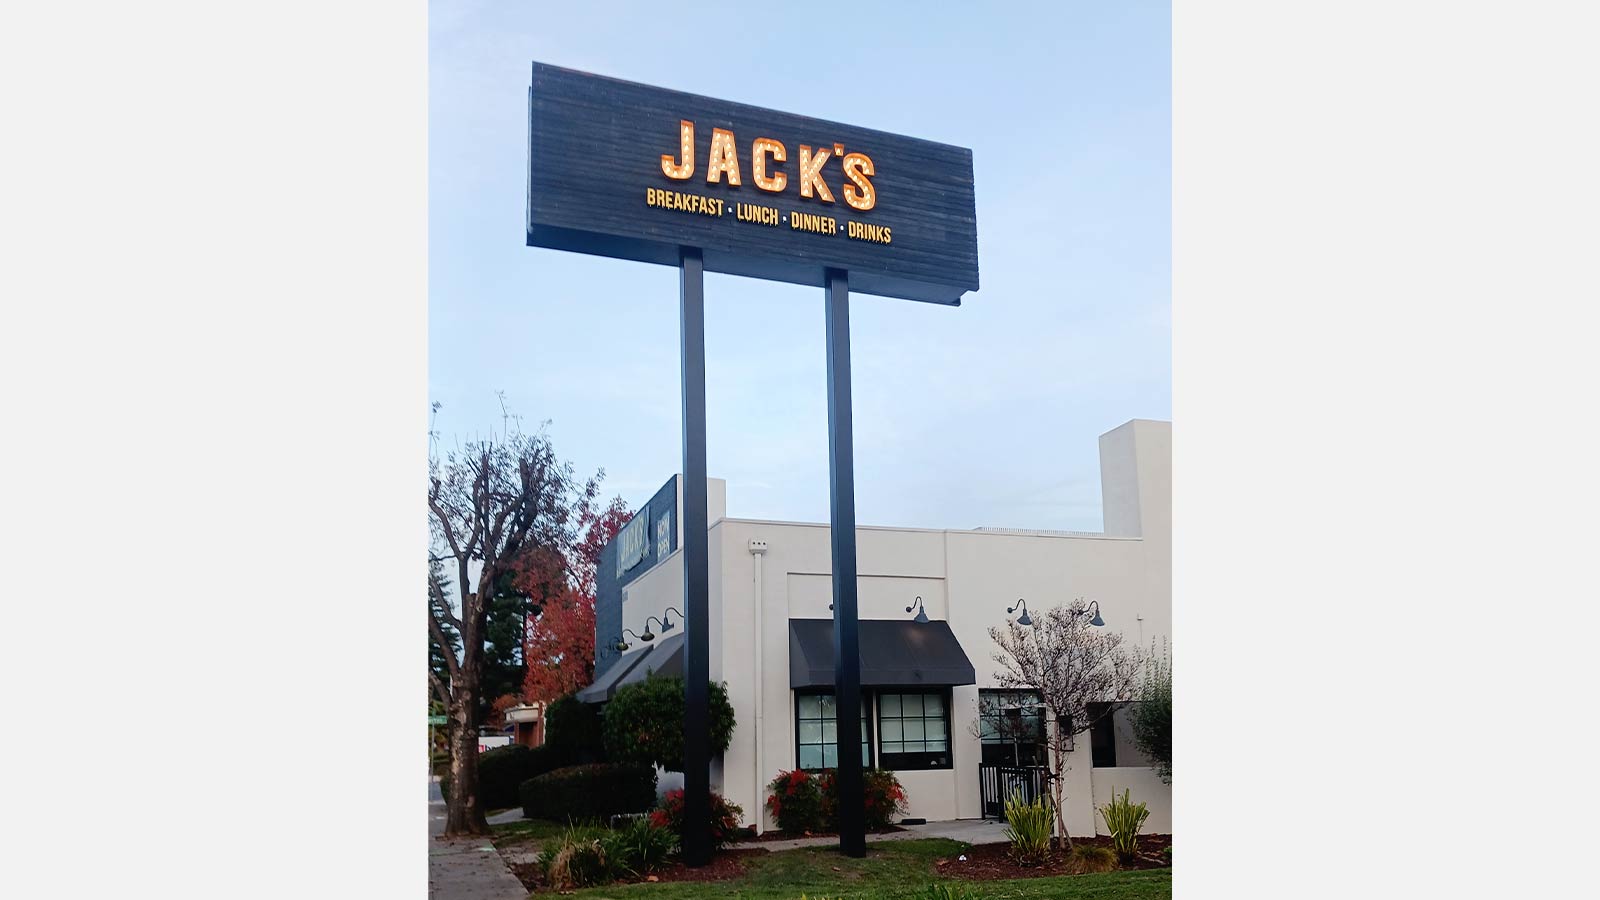 Jack's Restaurant and Bar pylon sign set up outdoors